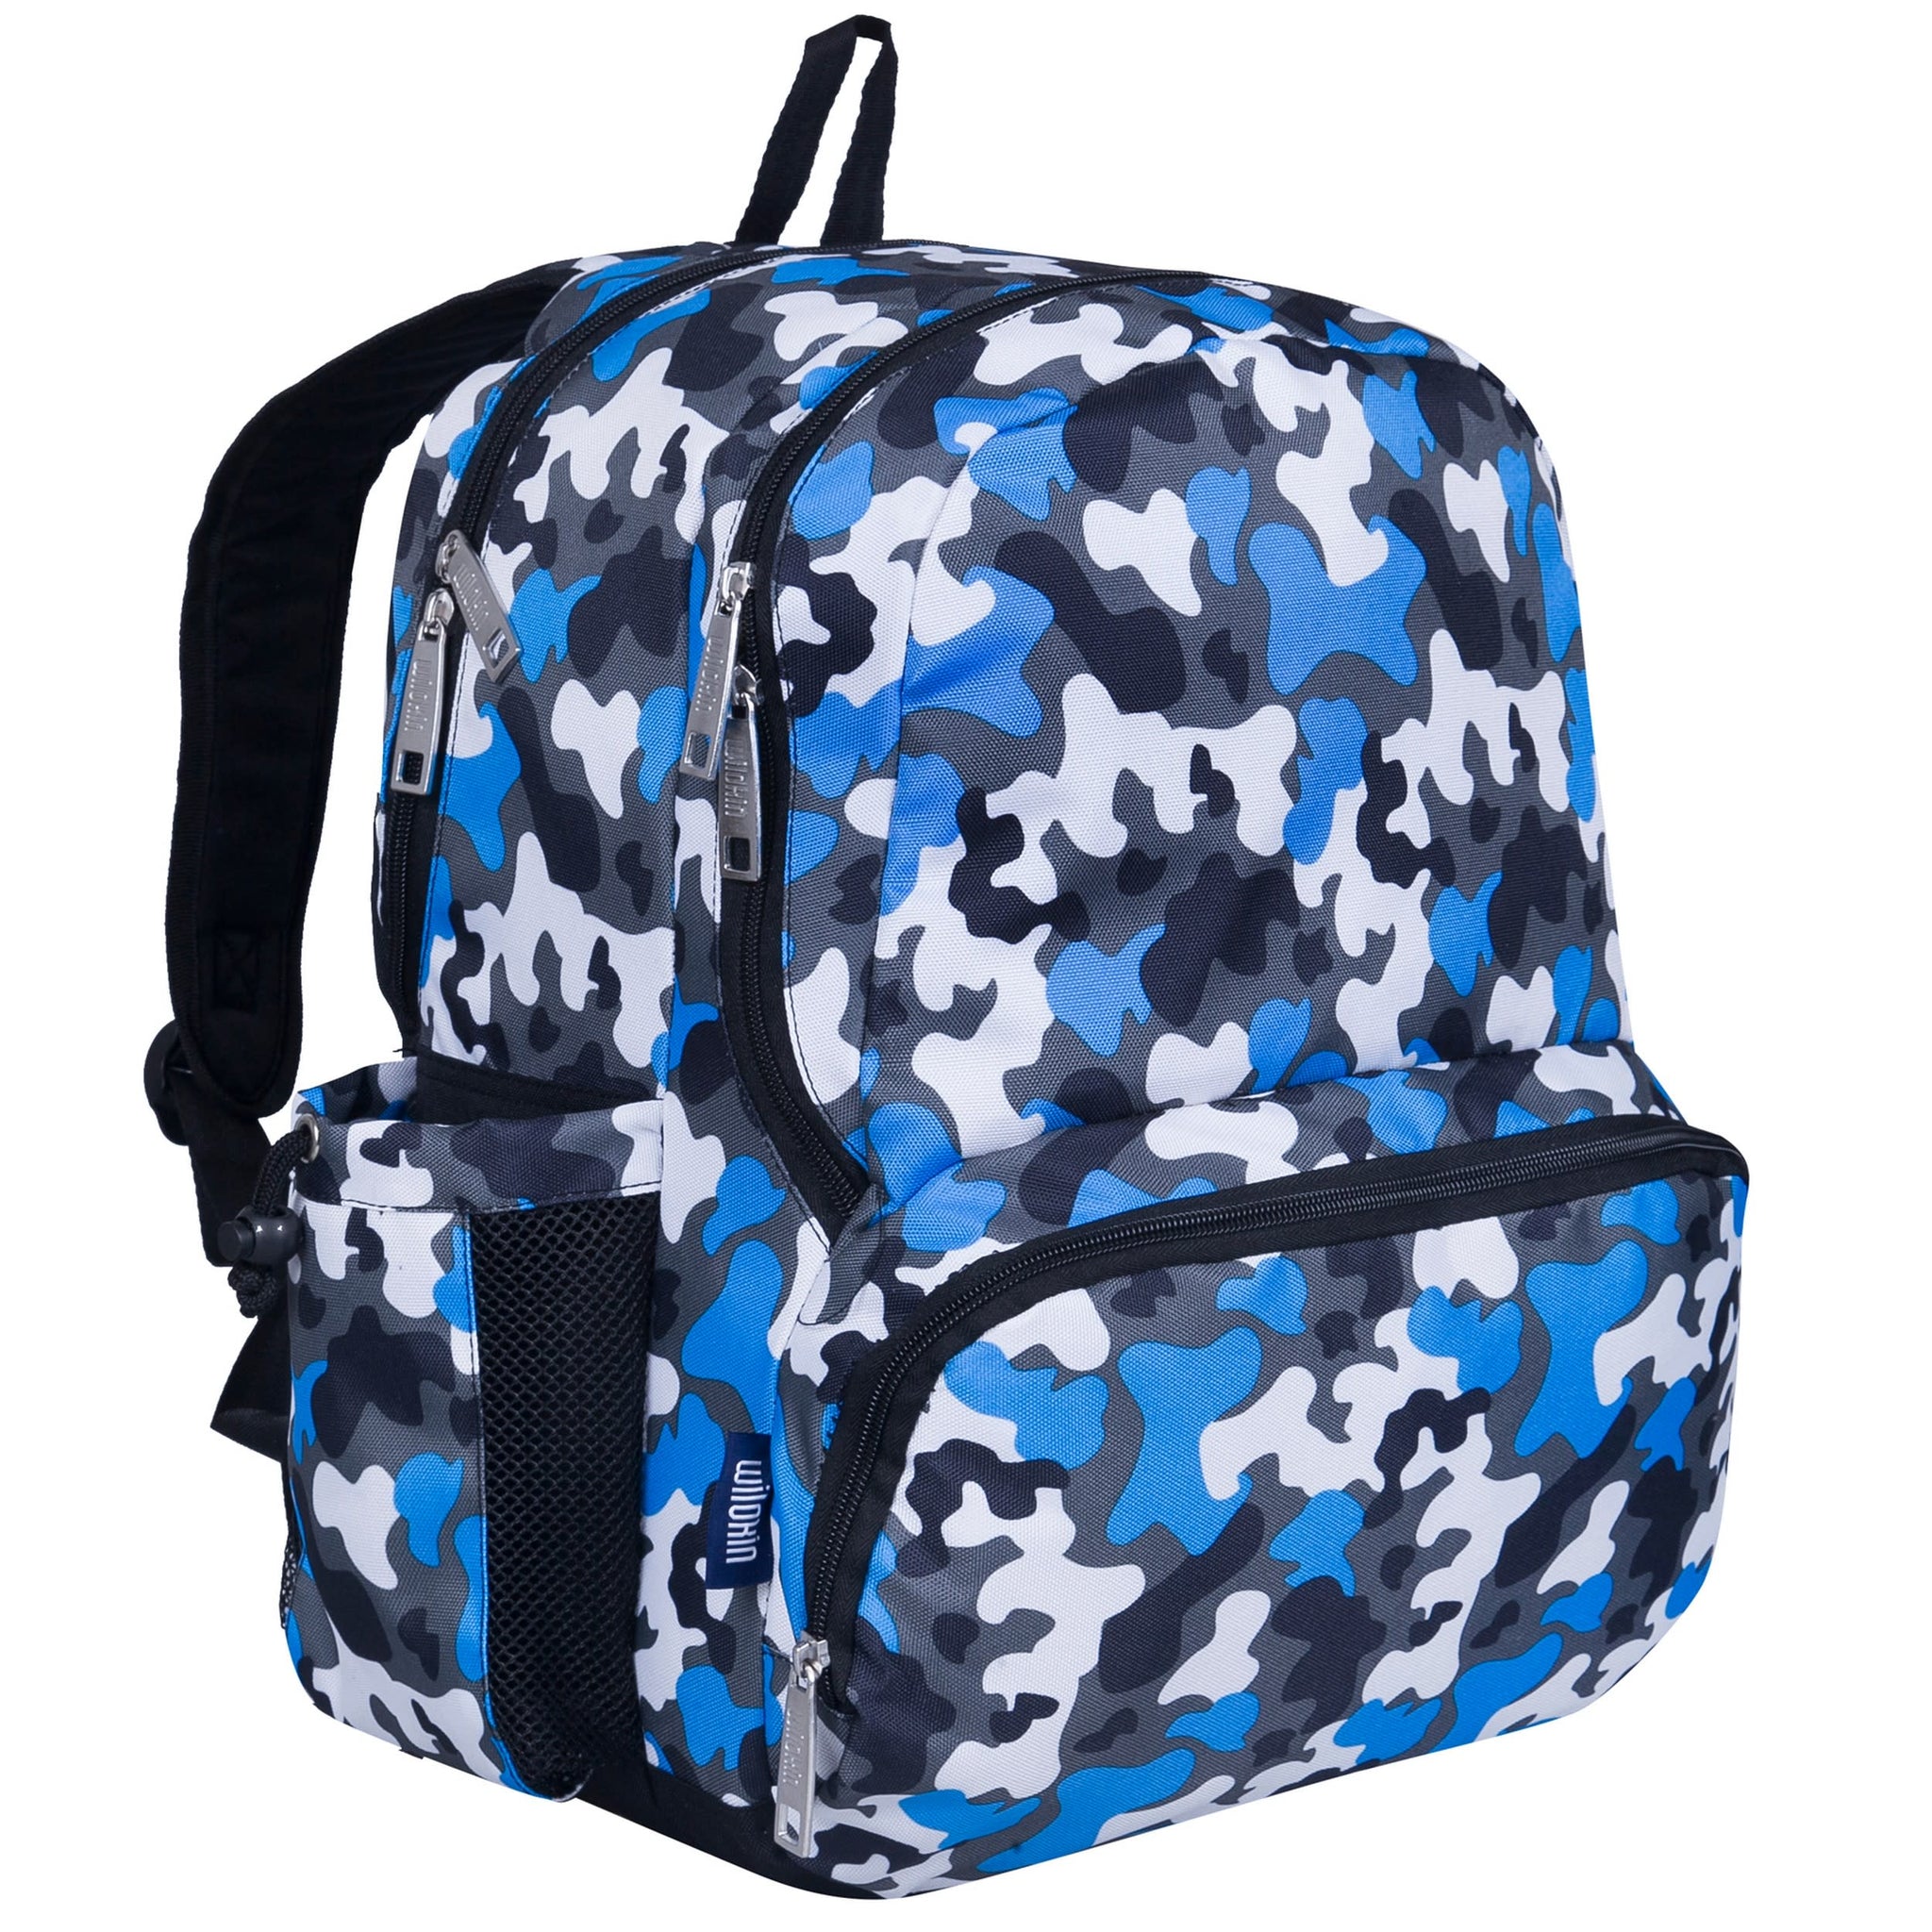 Wildkin Blue Camo 17 inch Backpack